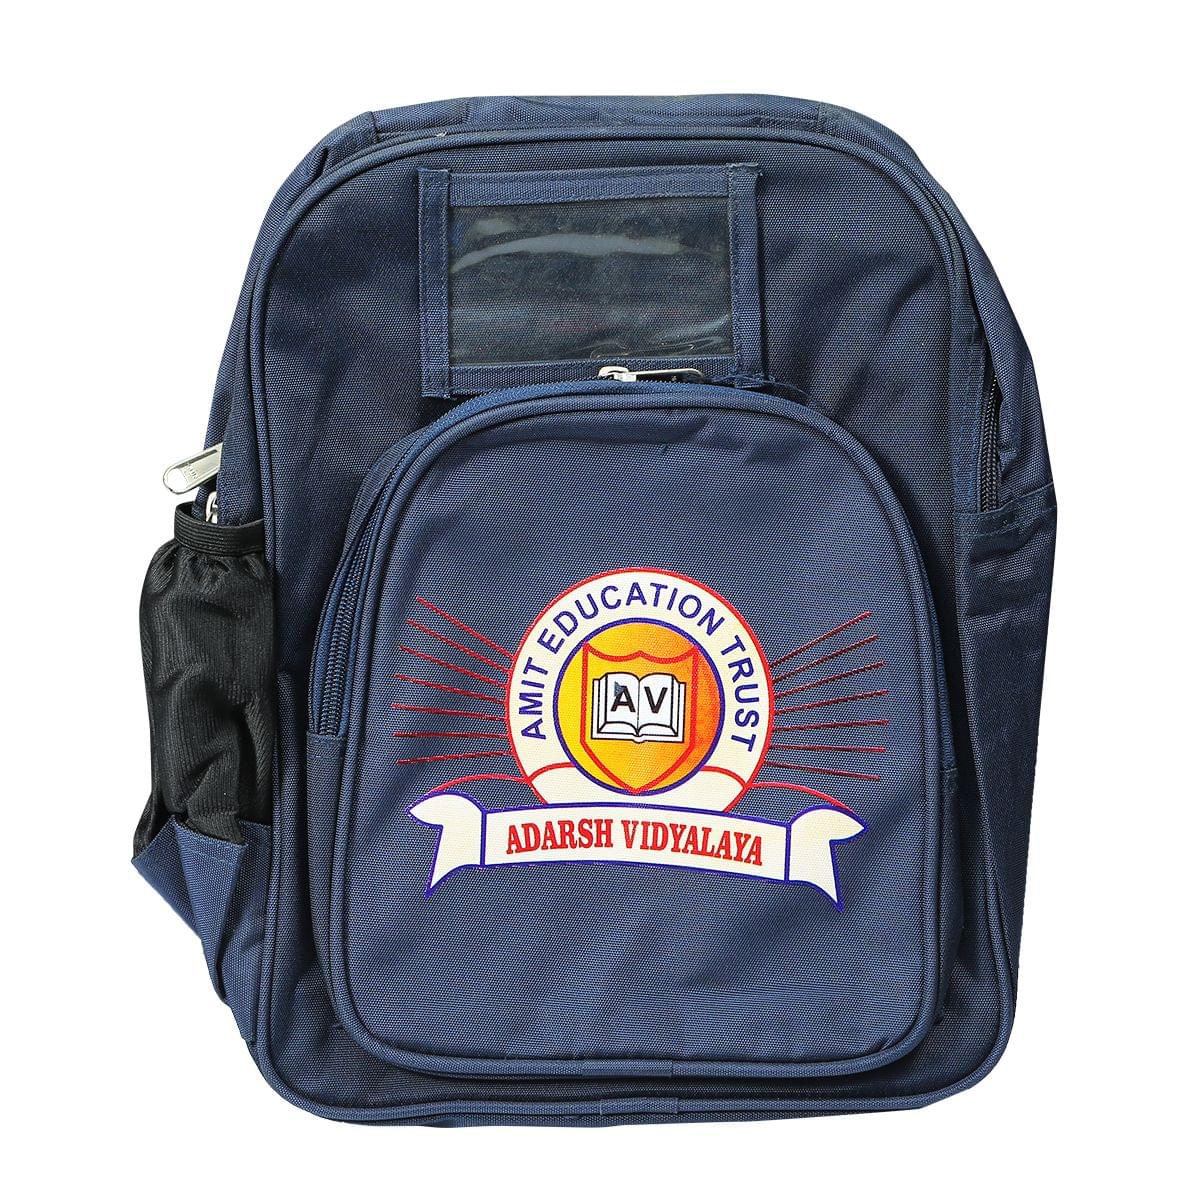 Rolling Backpacks in Backpacks - Walmart.com